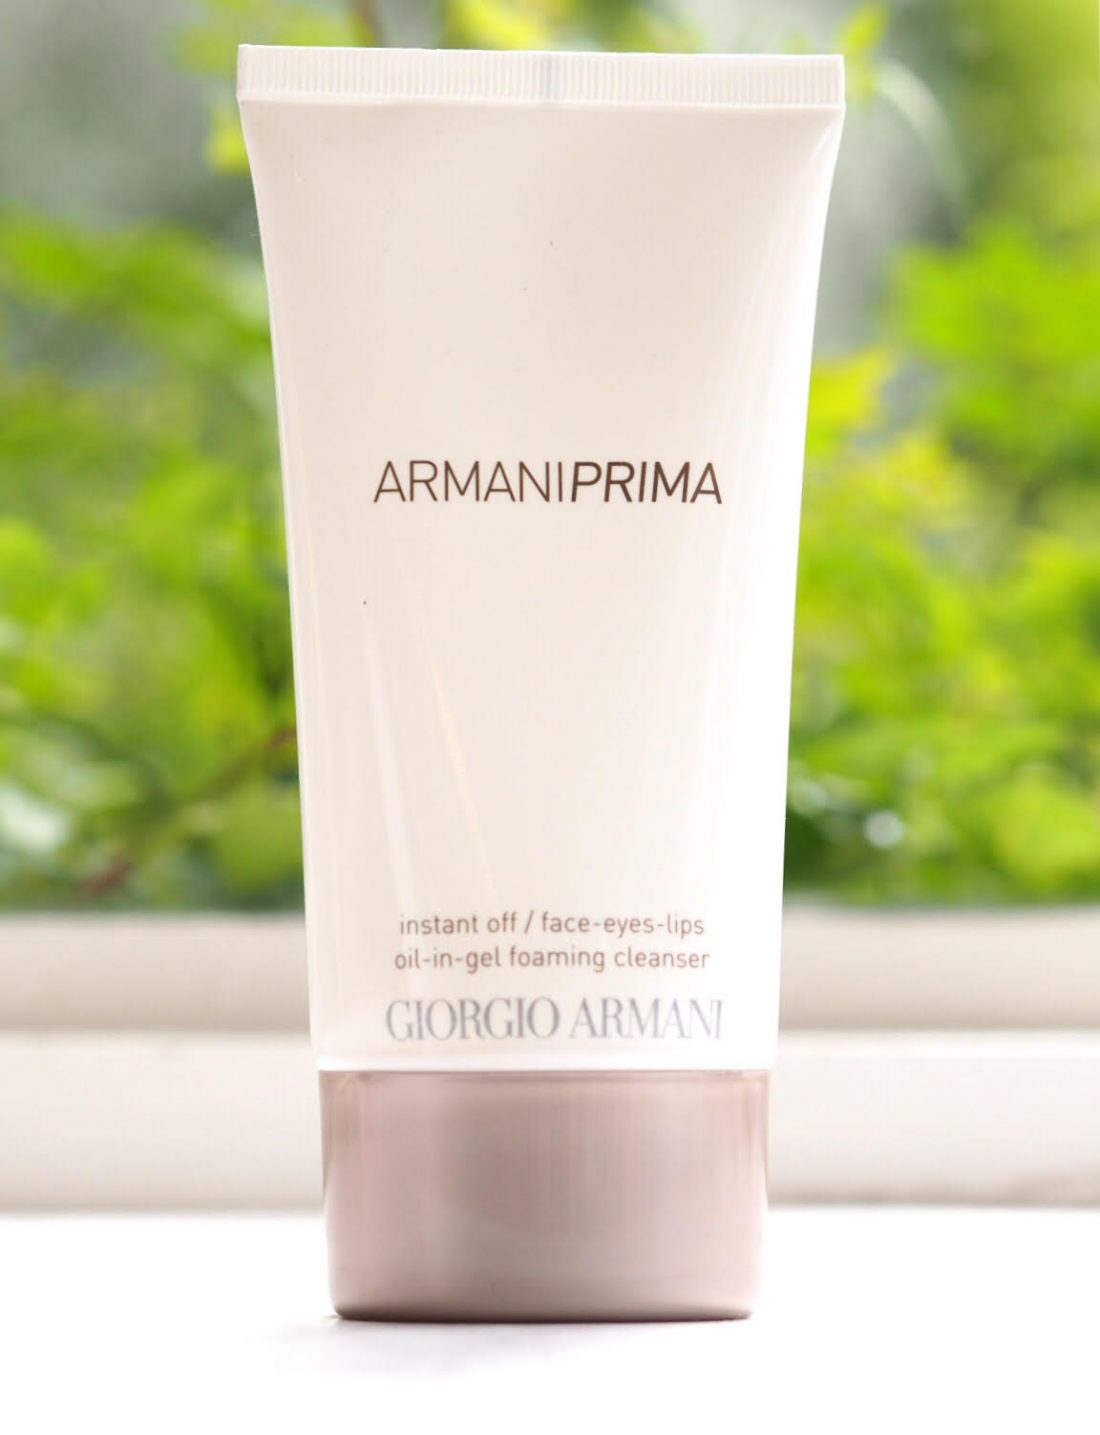 Armani Prima Instant Off Cleanser | British Beauty Blogger